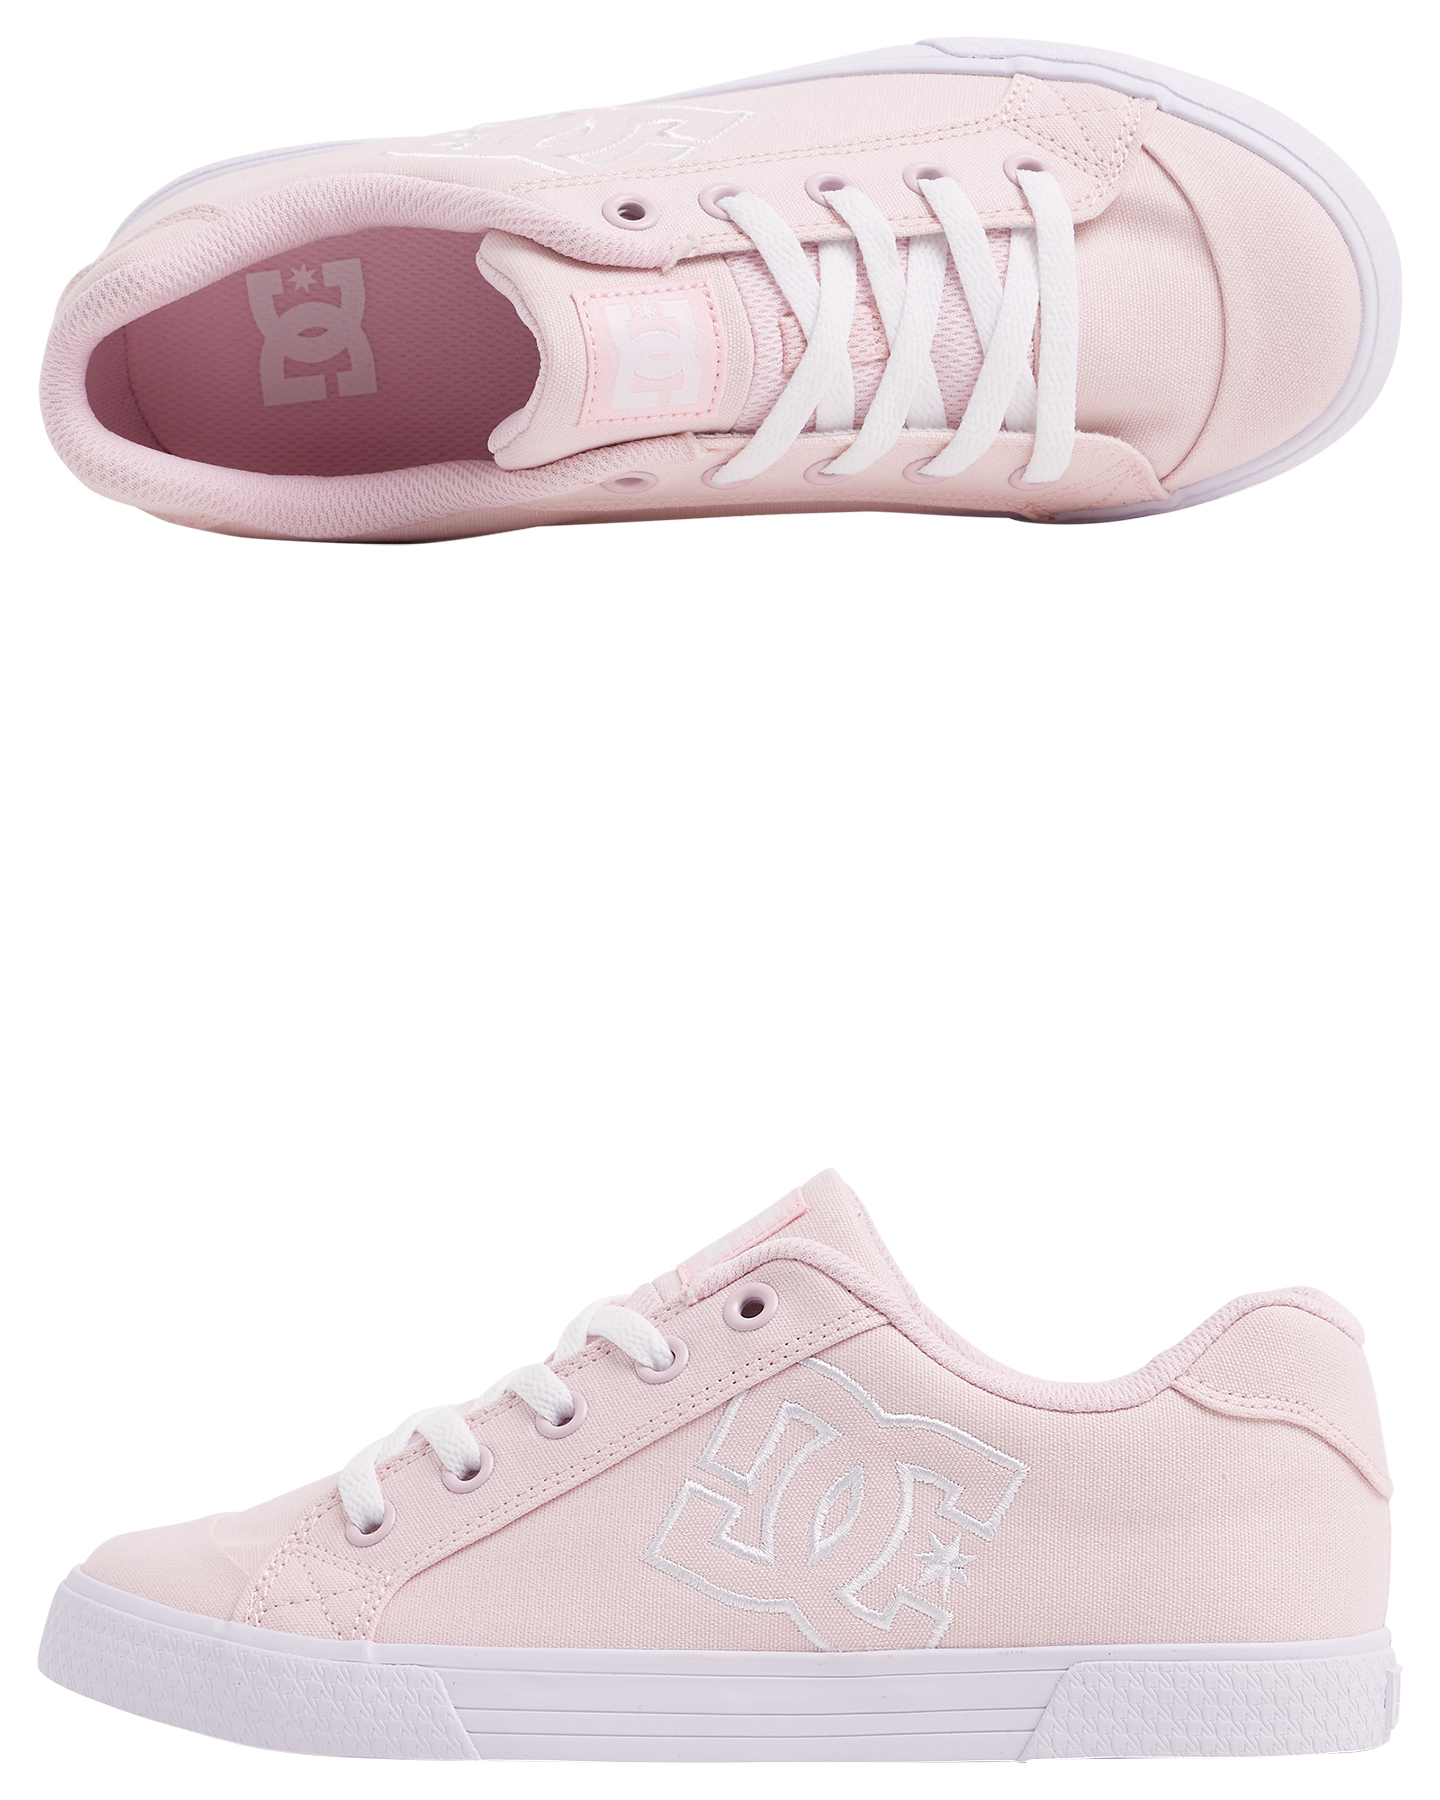 DC Shoes Damen Chelsea Tx-Shoes for Women Sneaker